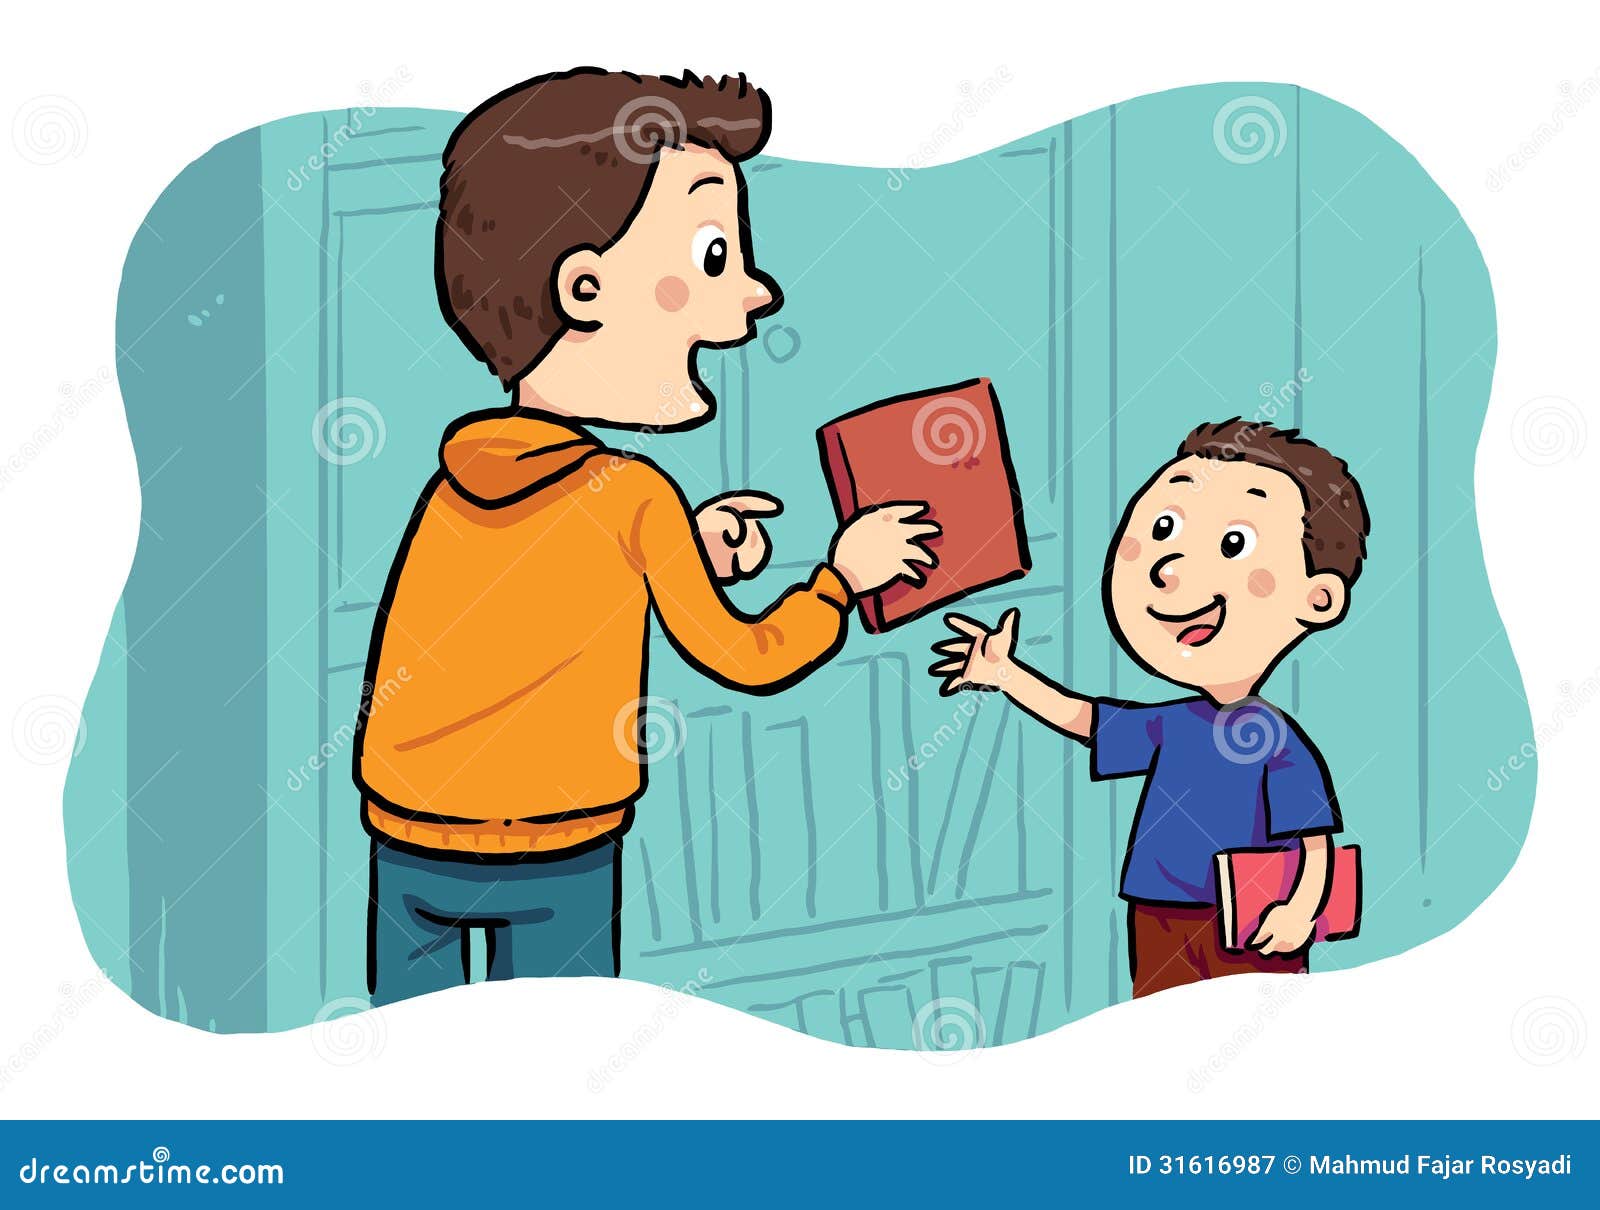 Not willing to give or share things. Одалживать иллюстрация. Take рисунок. Мальчик дает книгу. Картинка одолжить для детей.